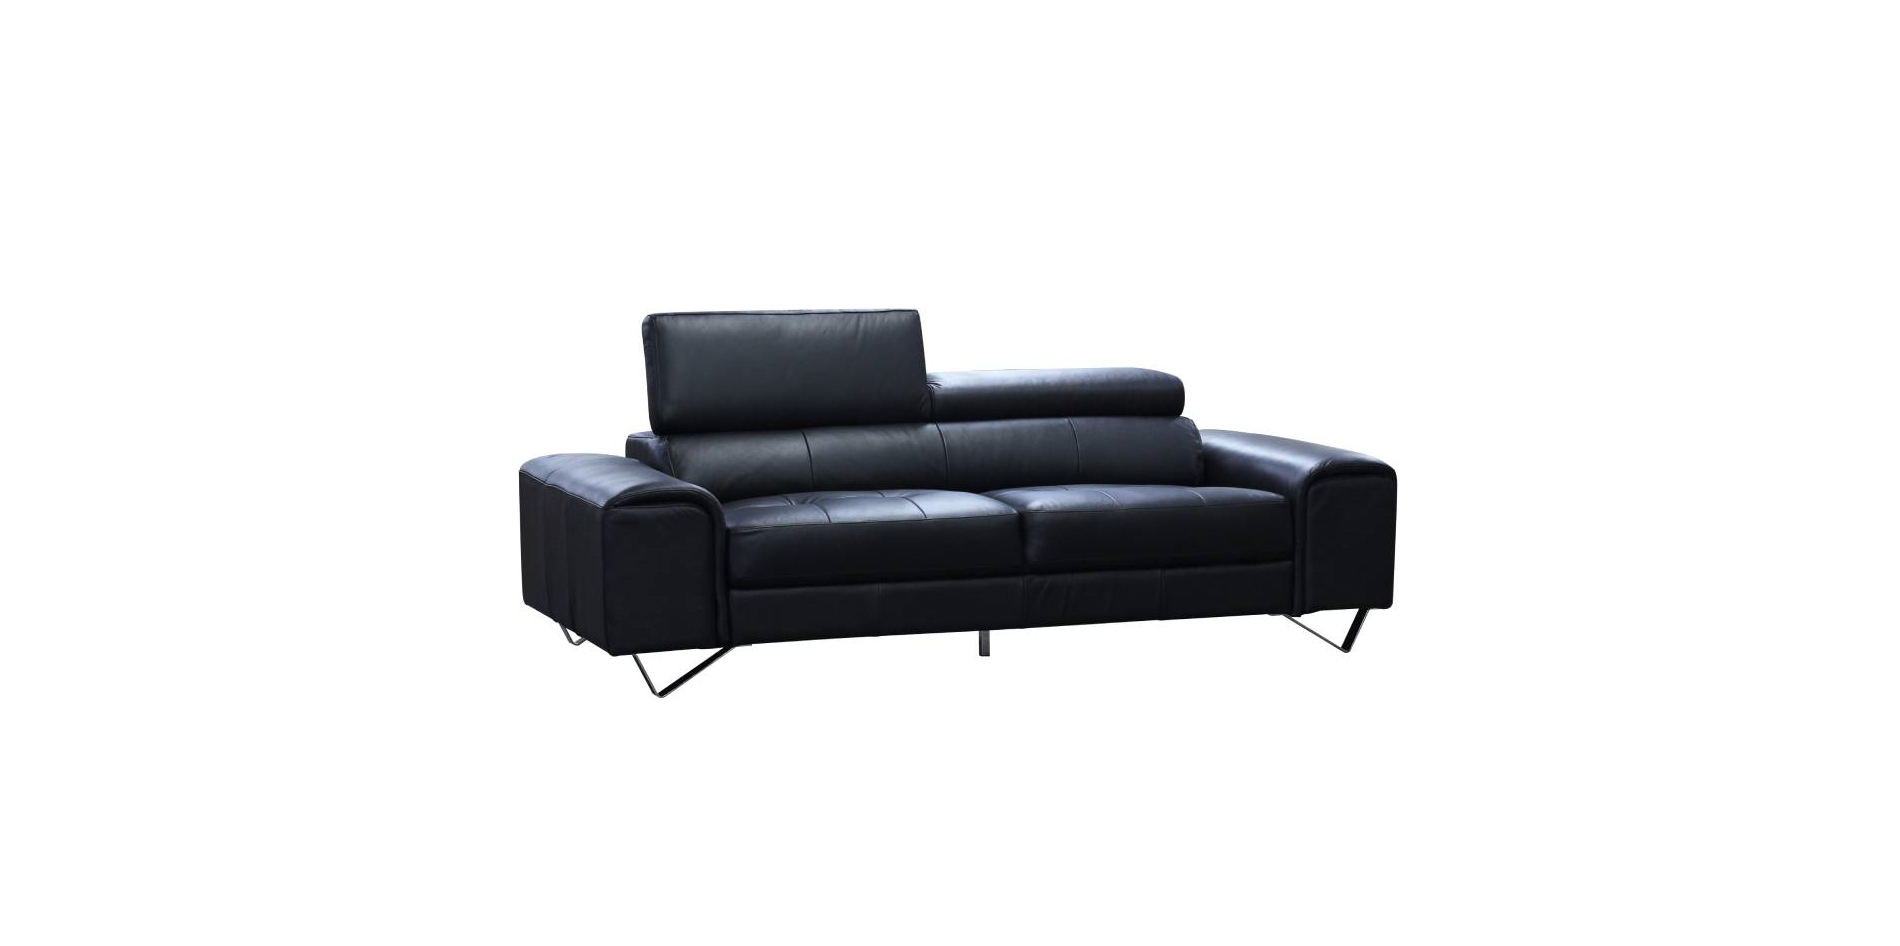 Bellagio Leather 3 Seater Sofa - Black